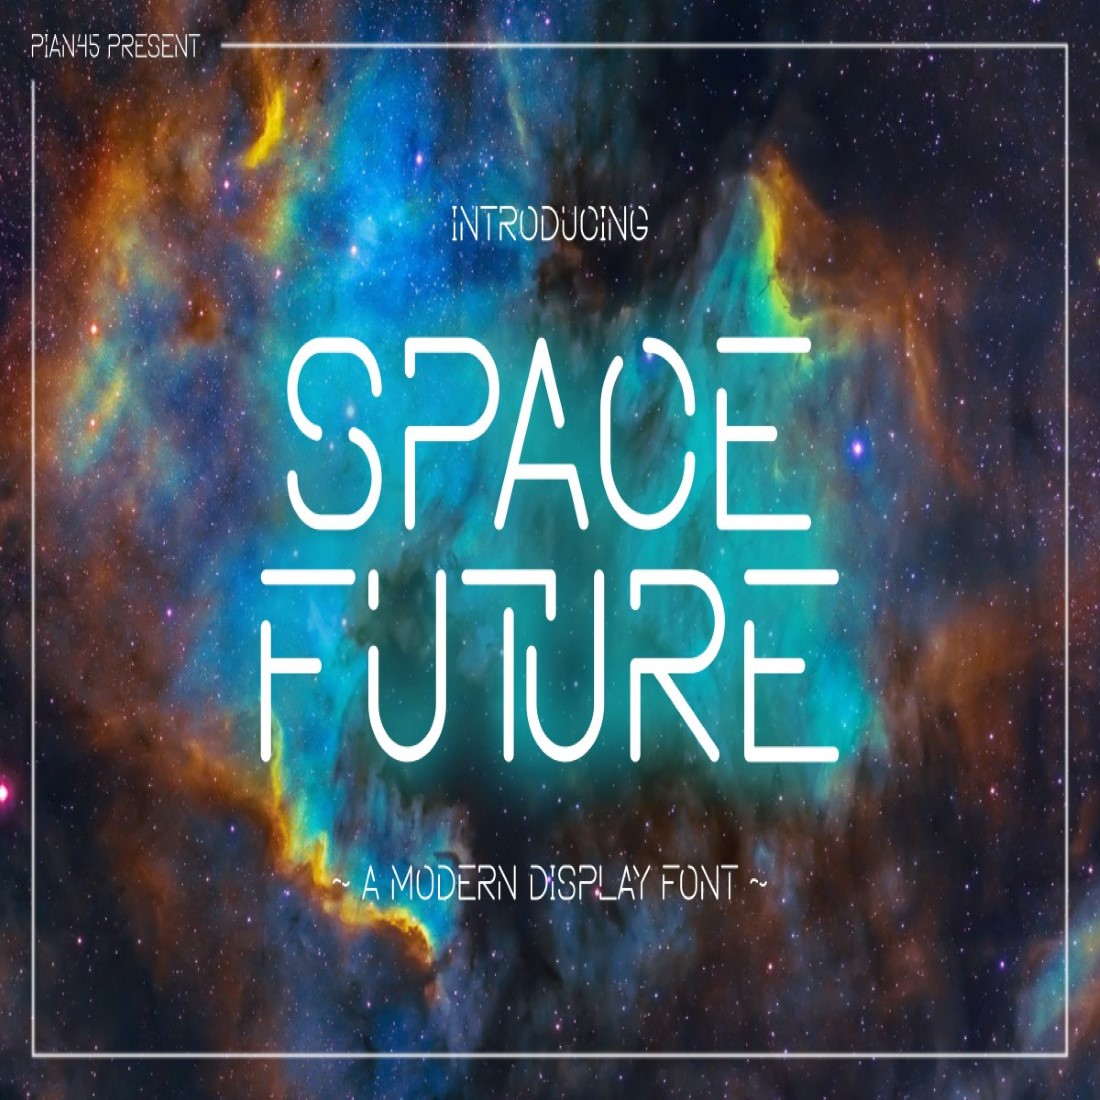 Space Future - Modern Futuristic Display Font cover image.